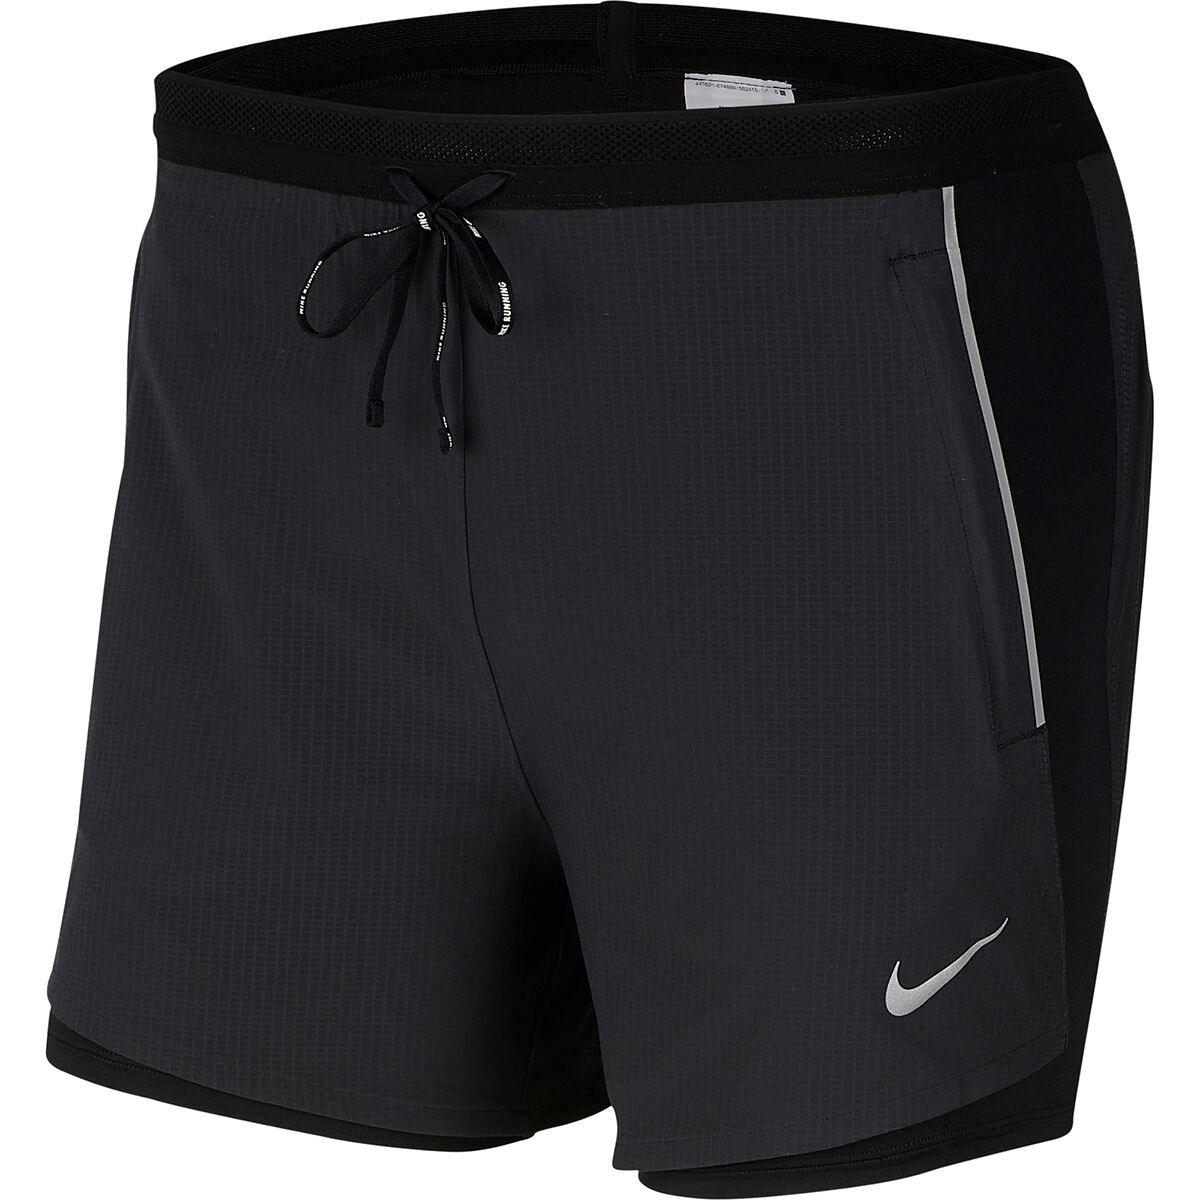 Nike Flex Swift 2-in-1 Hybrid Short - Clothing